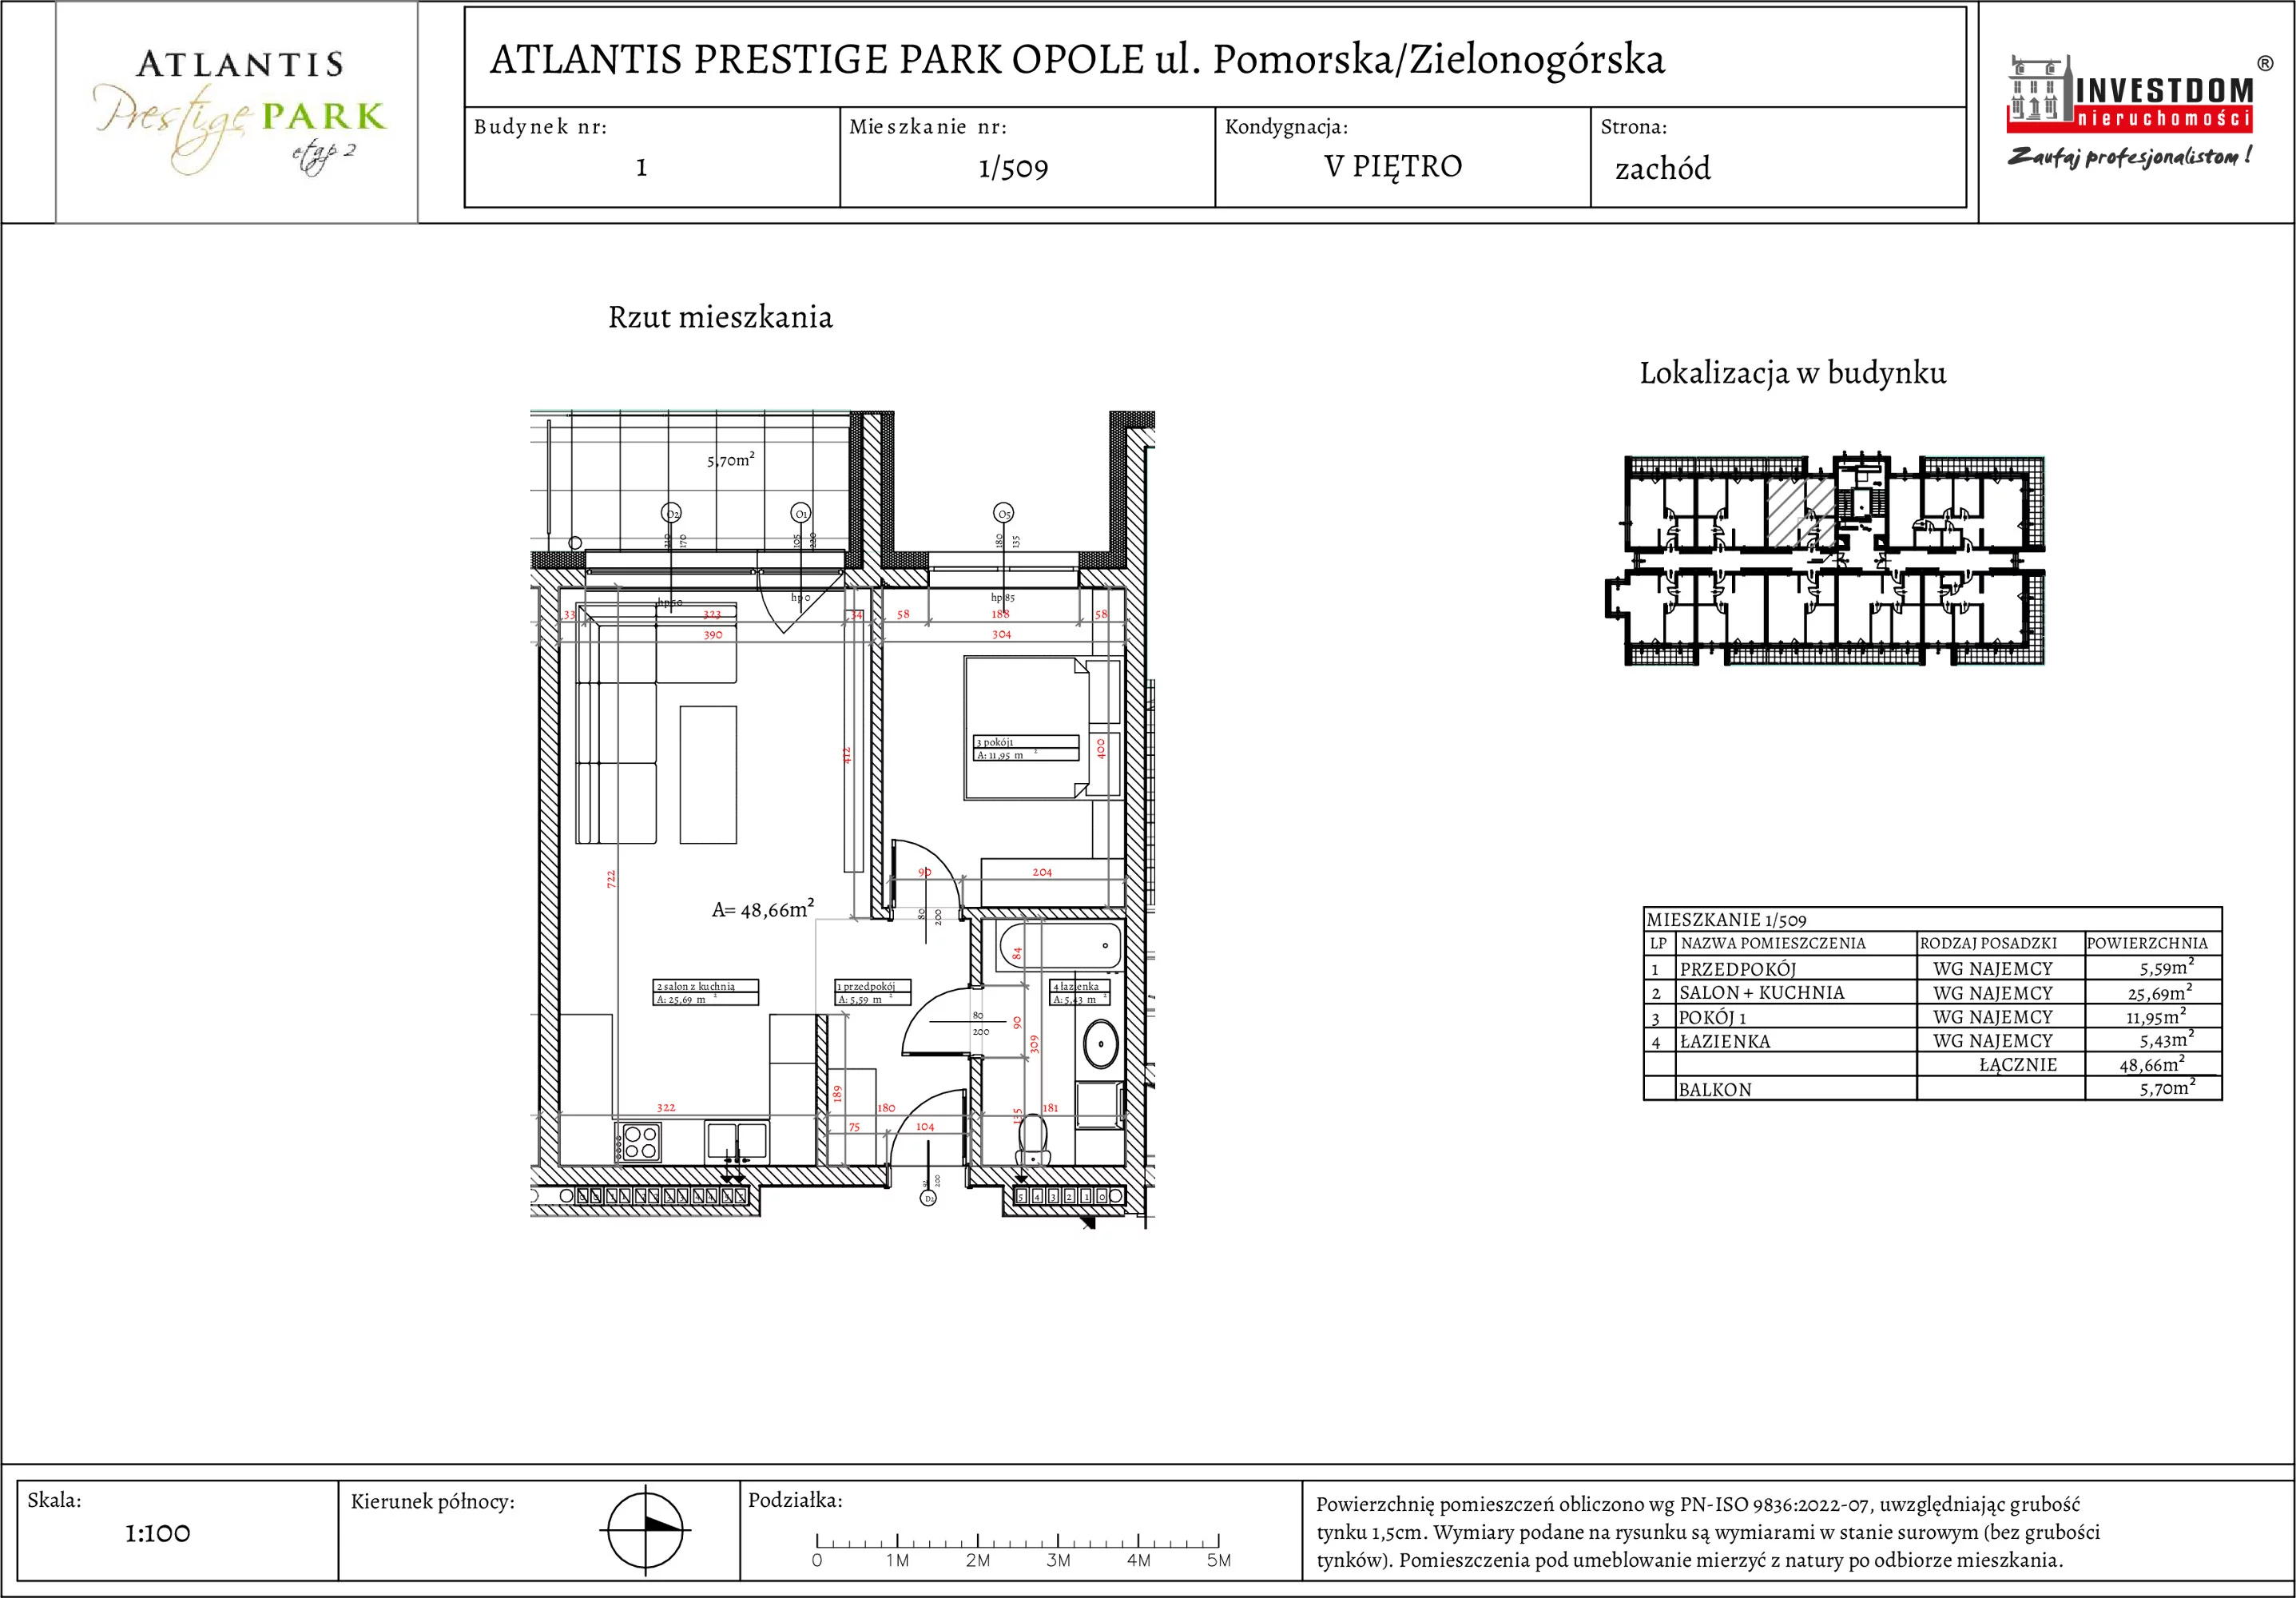 Apartament 48,66 m², piętro 5, oferta nr 1/509, Atlantis Prestige Park, Opole, Malinka, ul. Pomorska / Zielonogórska / Harcmistrza Kamińskiego